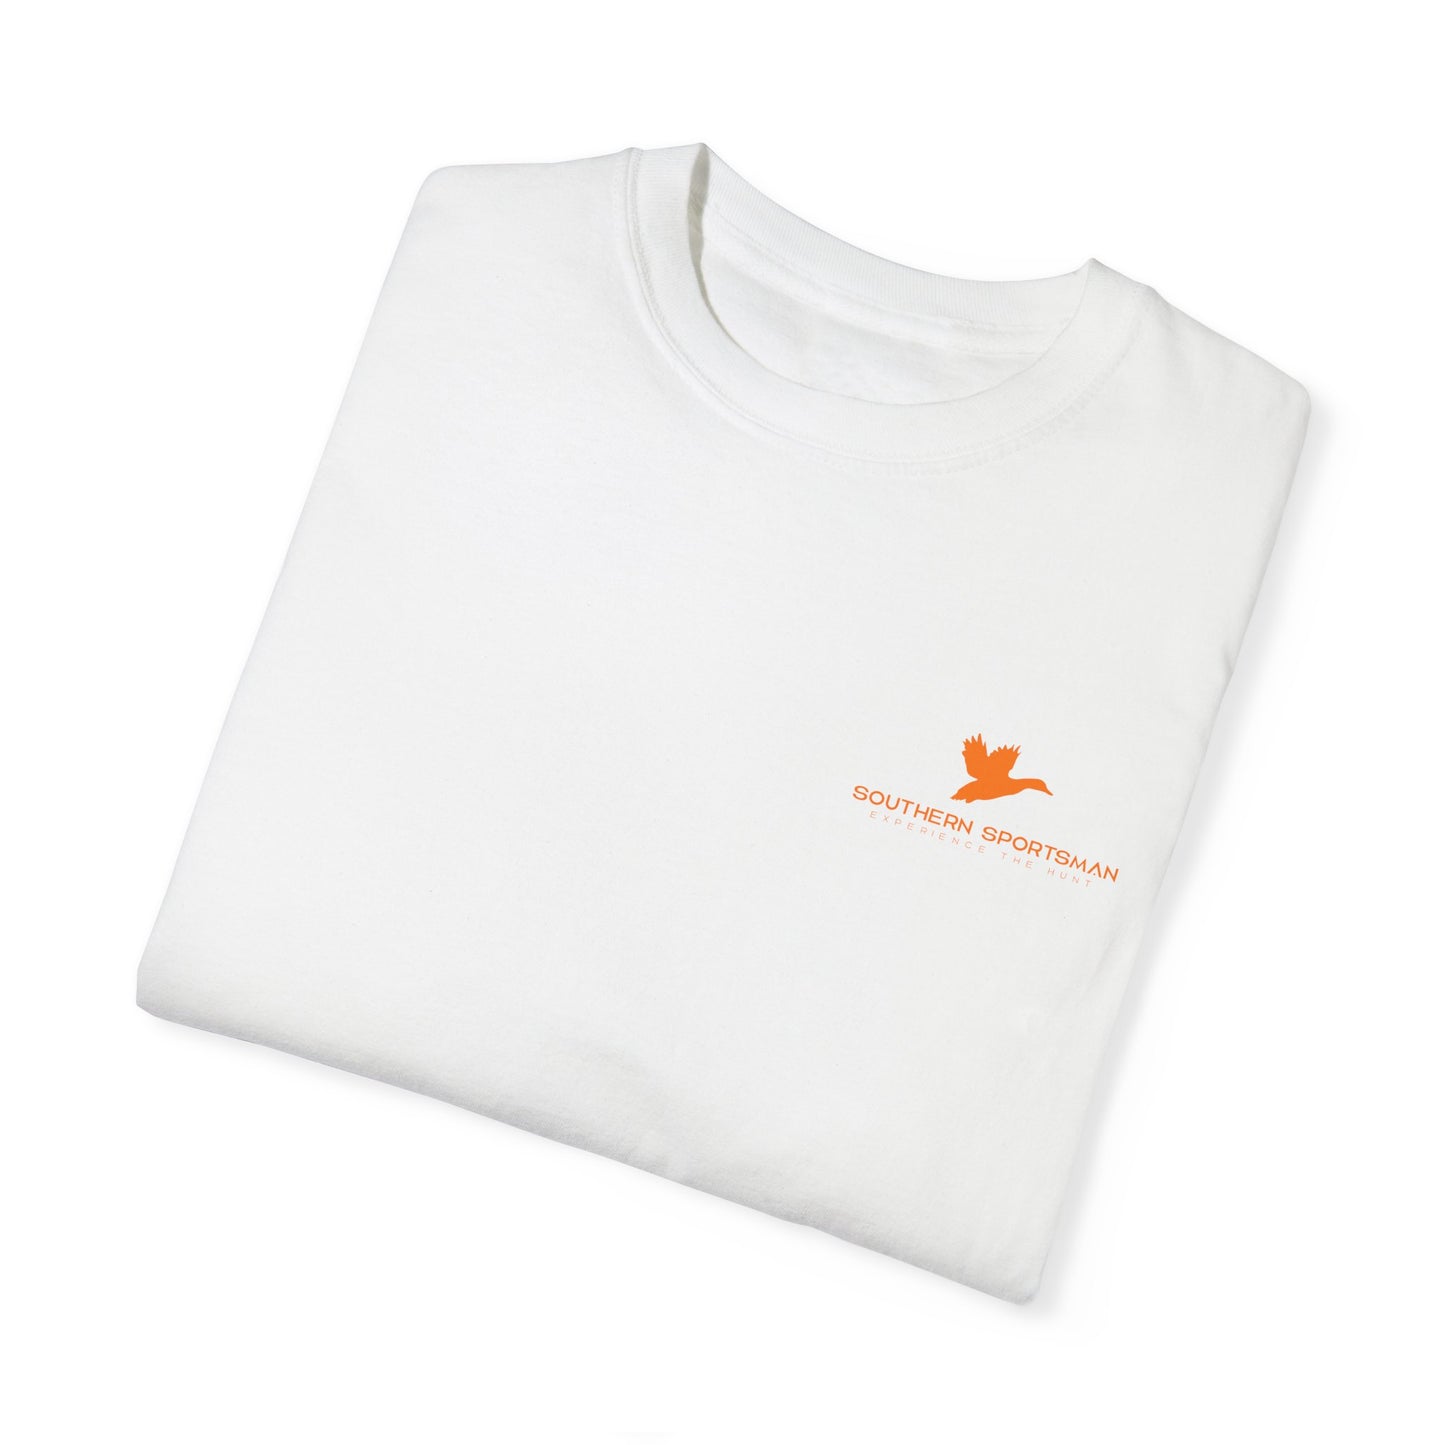 Sunset Buck Comfort Colors T-shirt